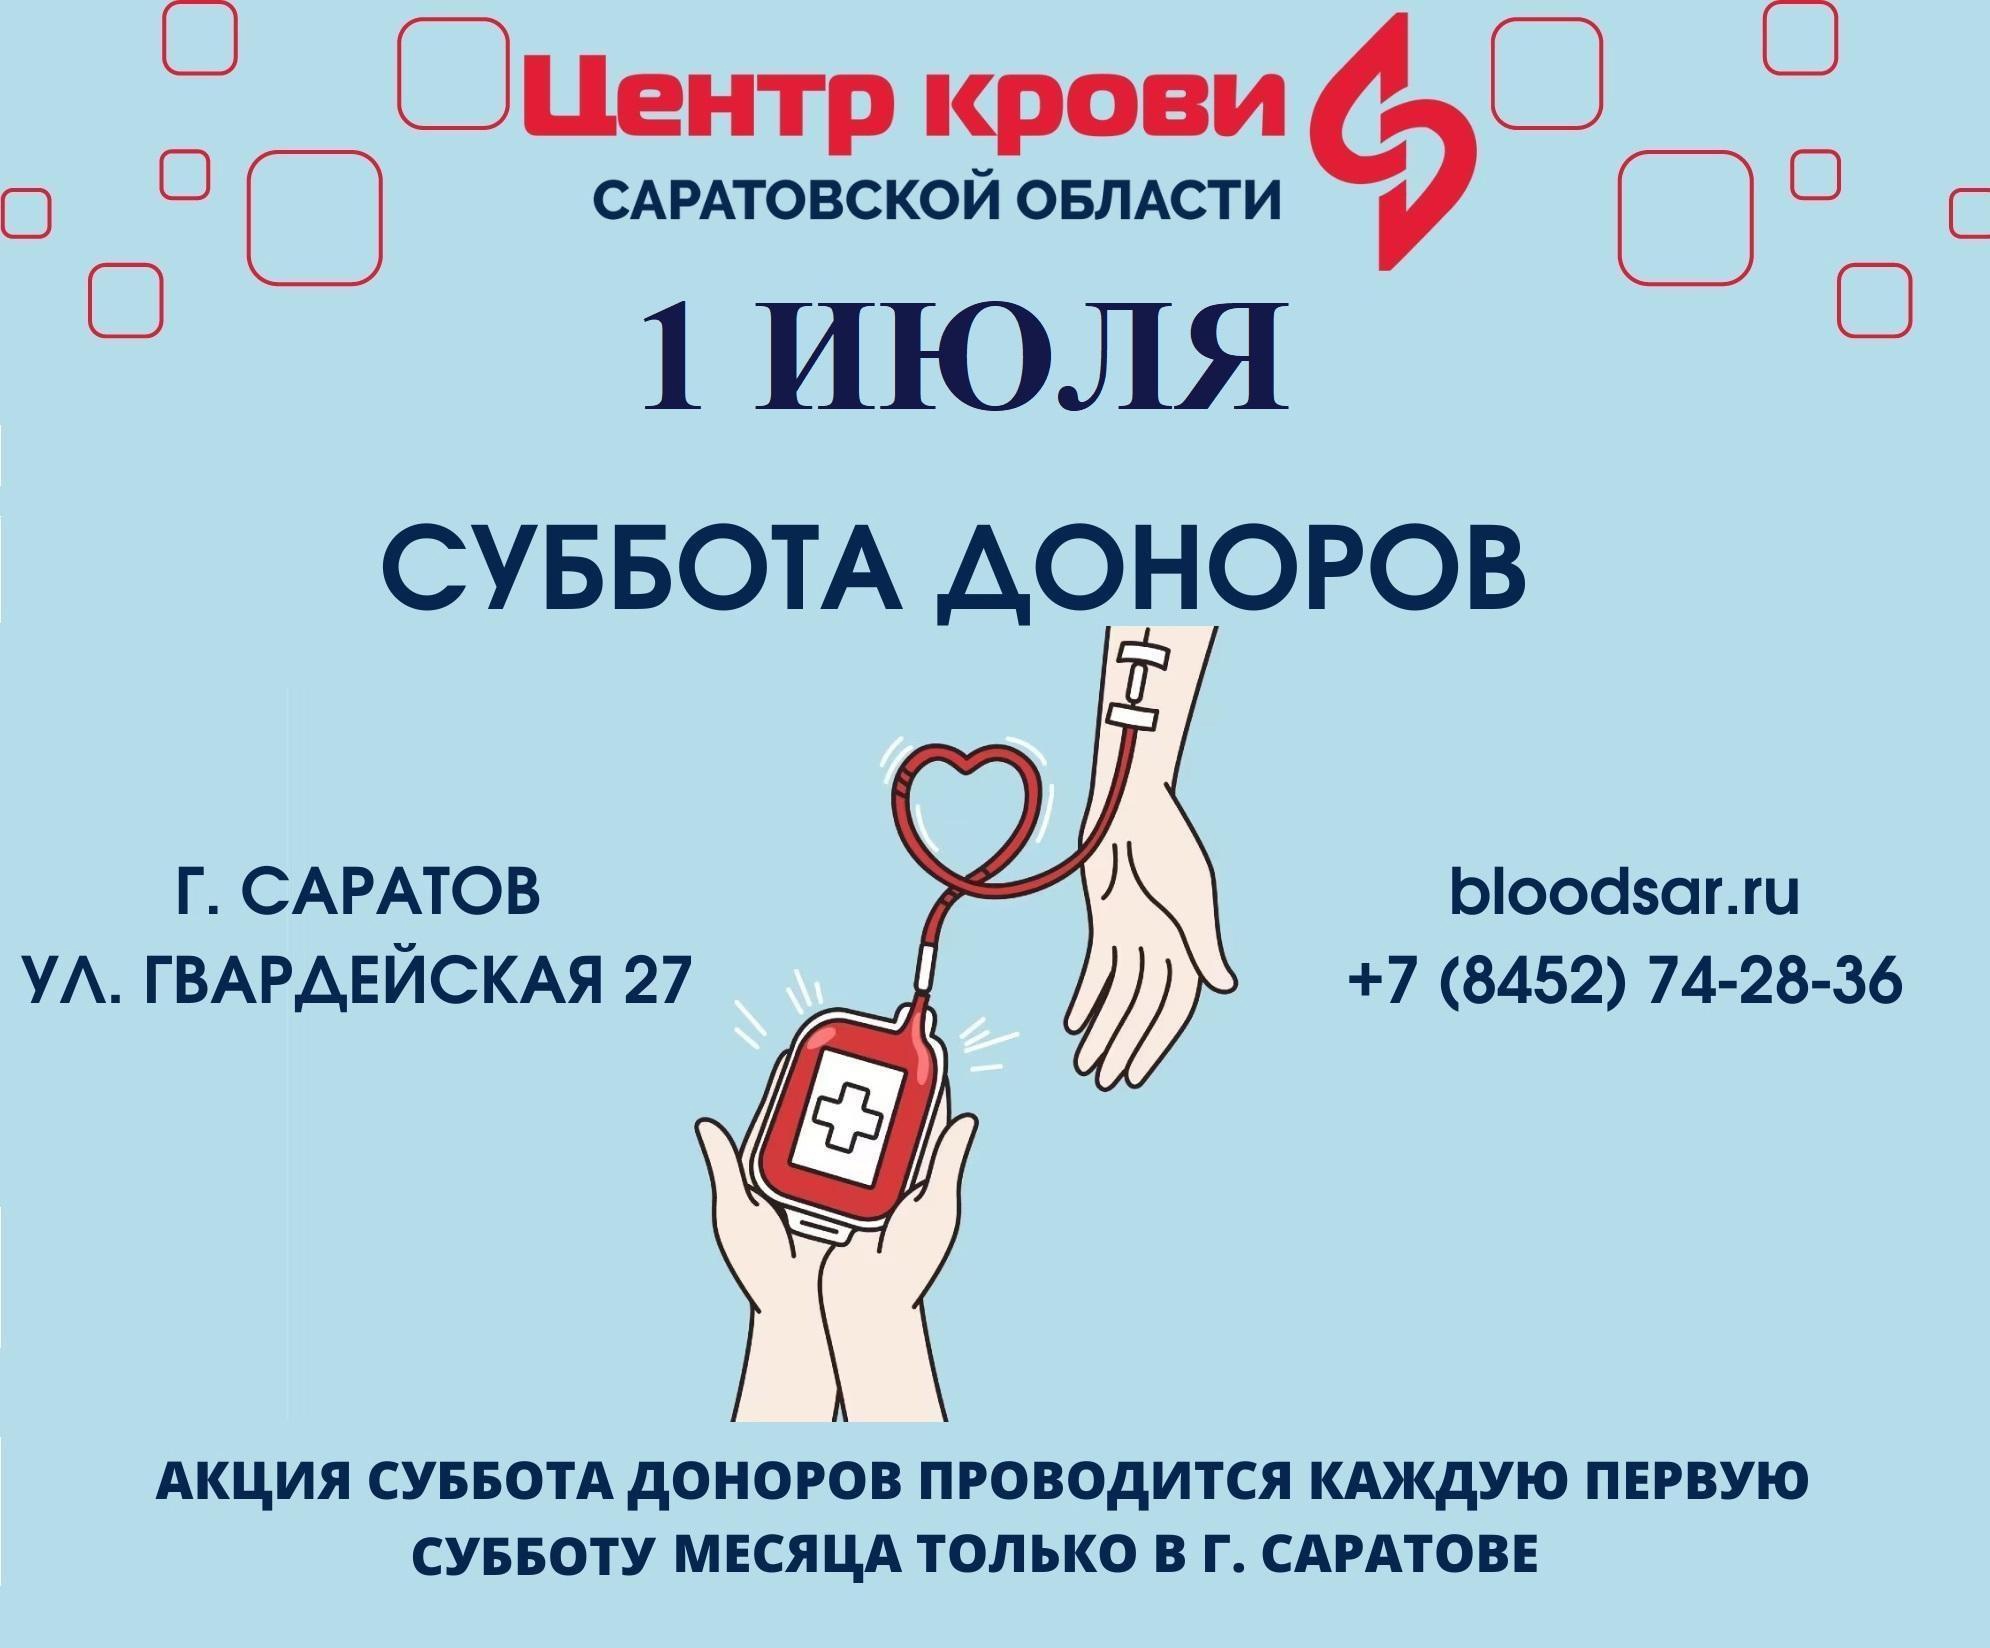 Поиск донора. Донорство крови. Донорский центр Саратов. Суббота донора картинки. Плакат донорская суббота.